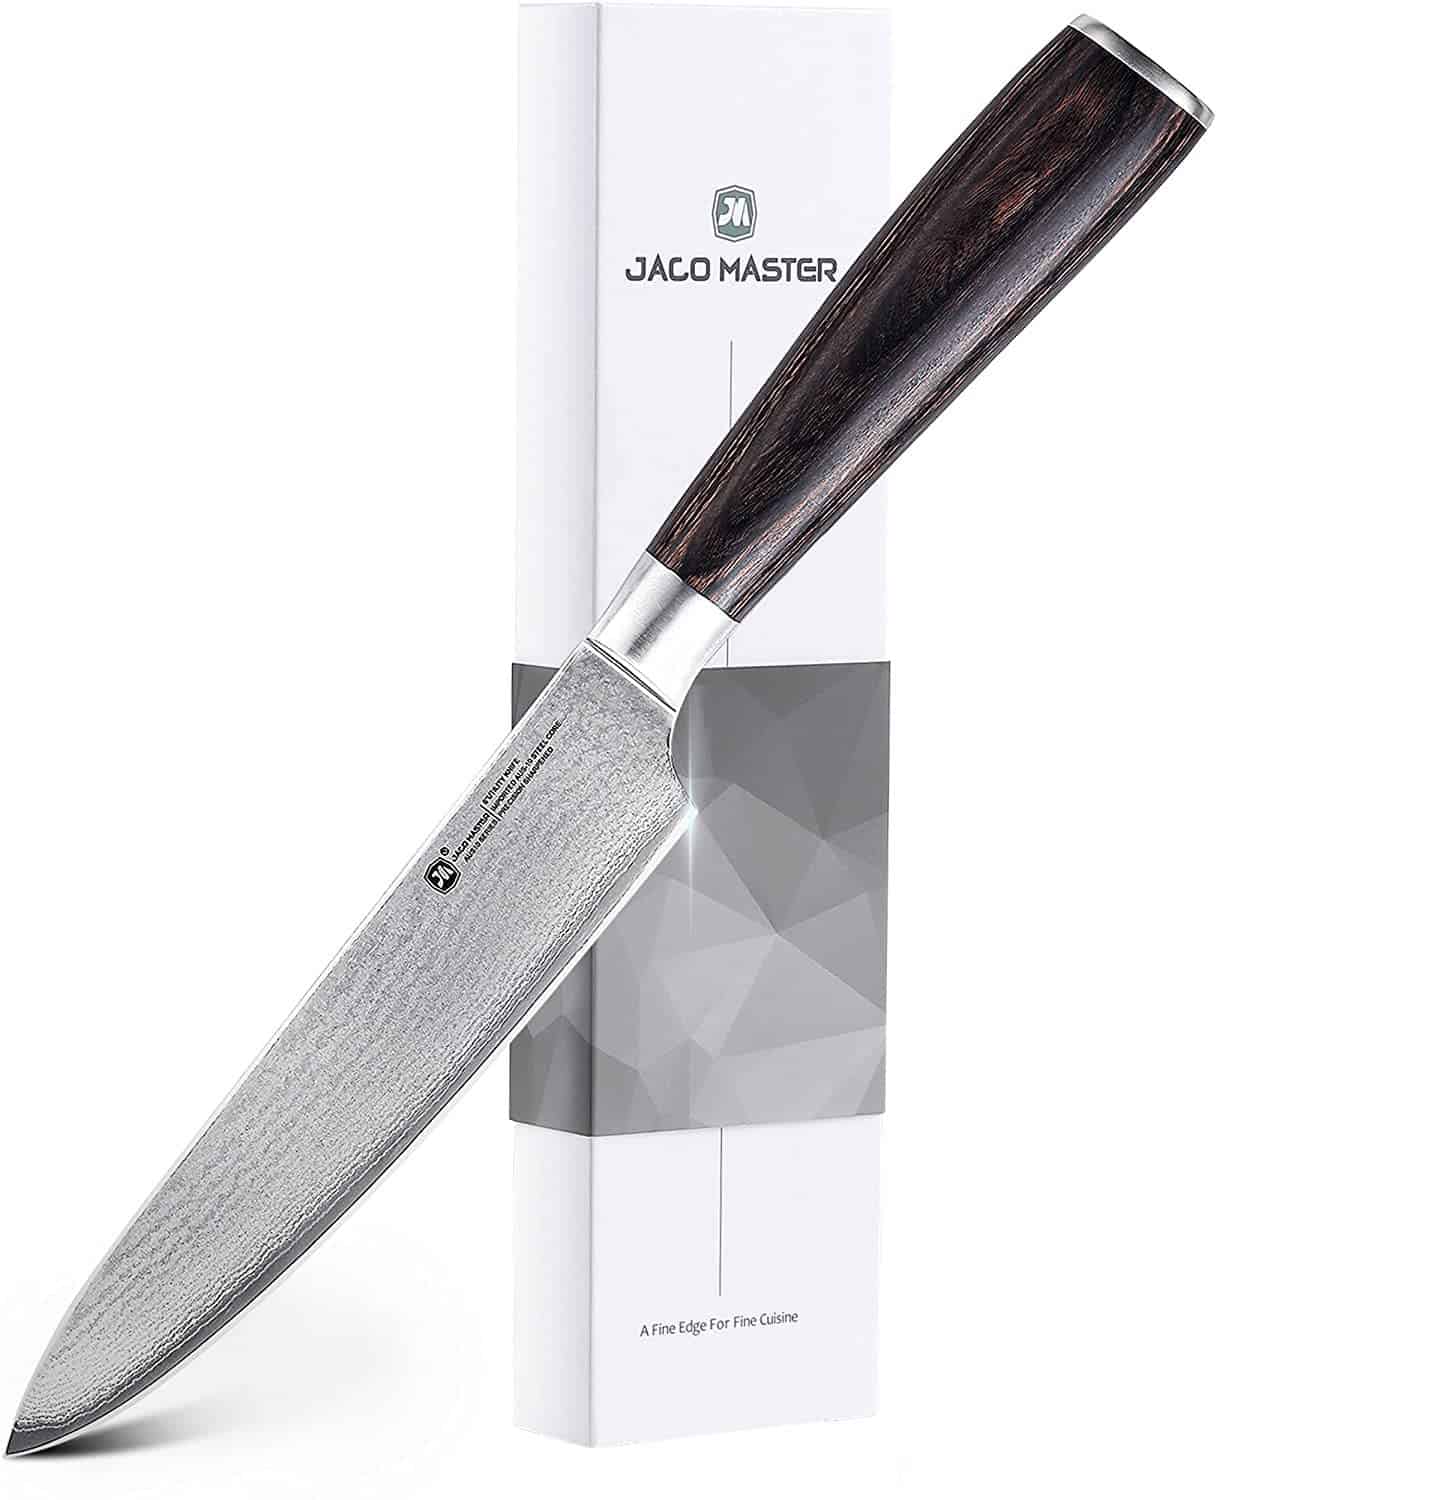 Best budget AUS 10 Japanese steel knife- Jaco Master 6 Utility Chef Knife